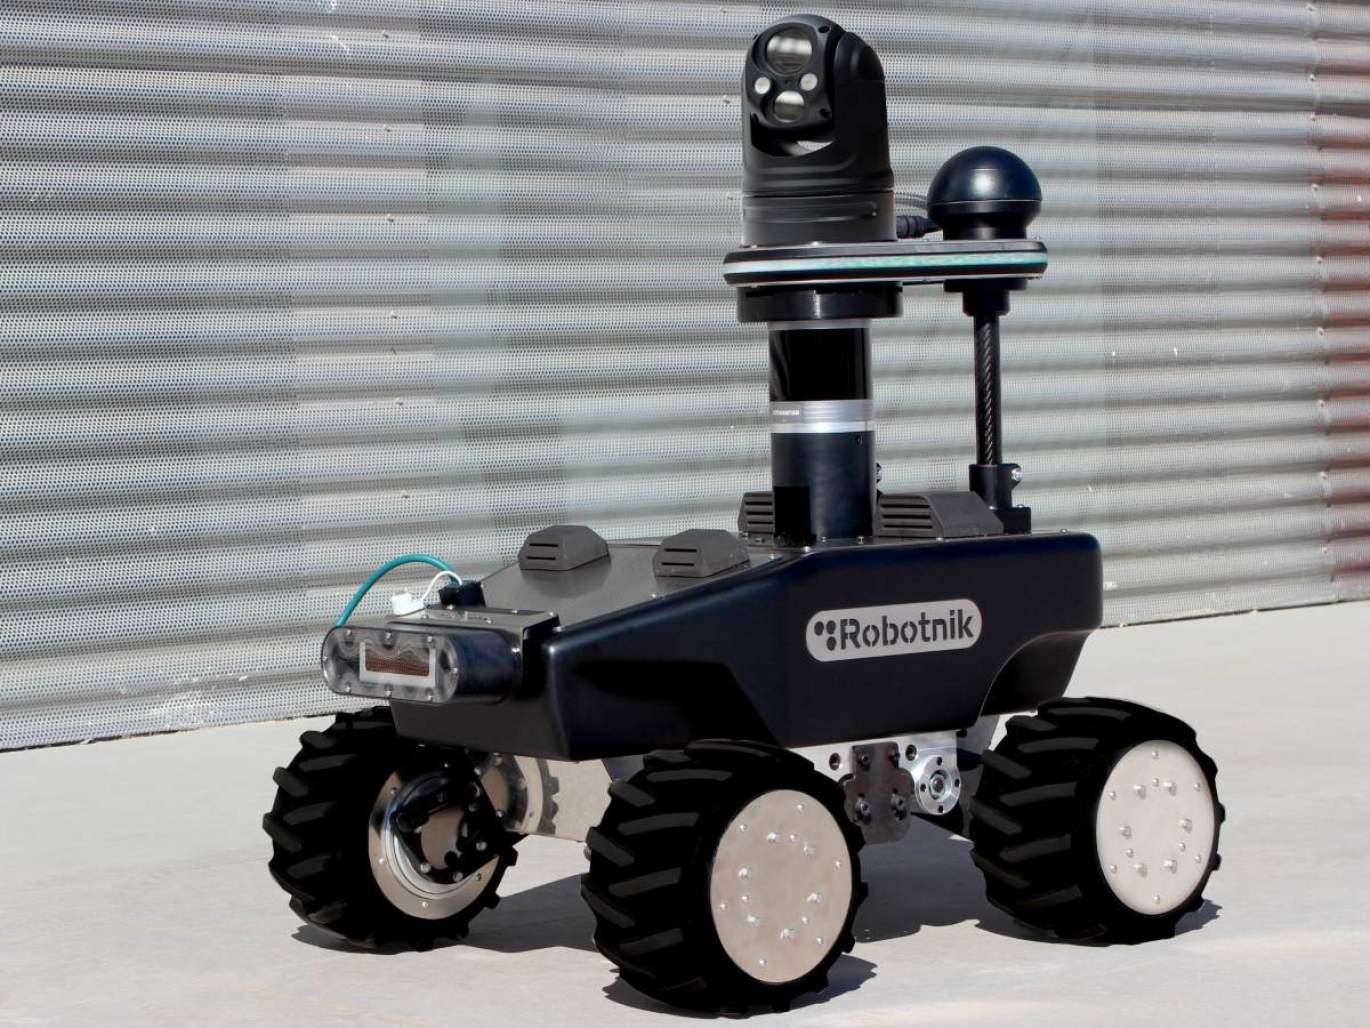 Robotnik brings new mobile surveillance robot to market